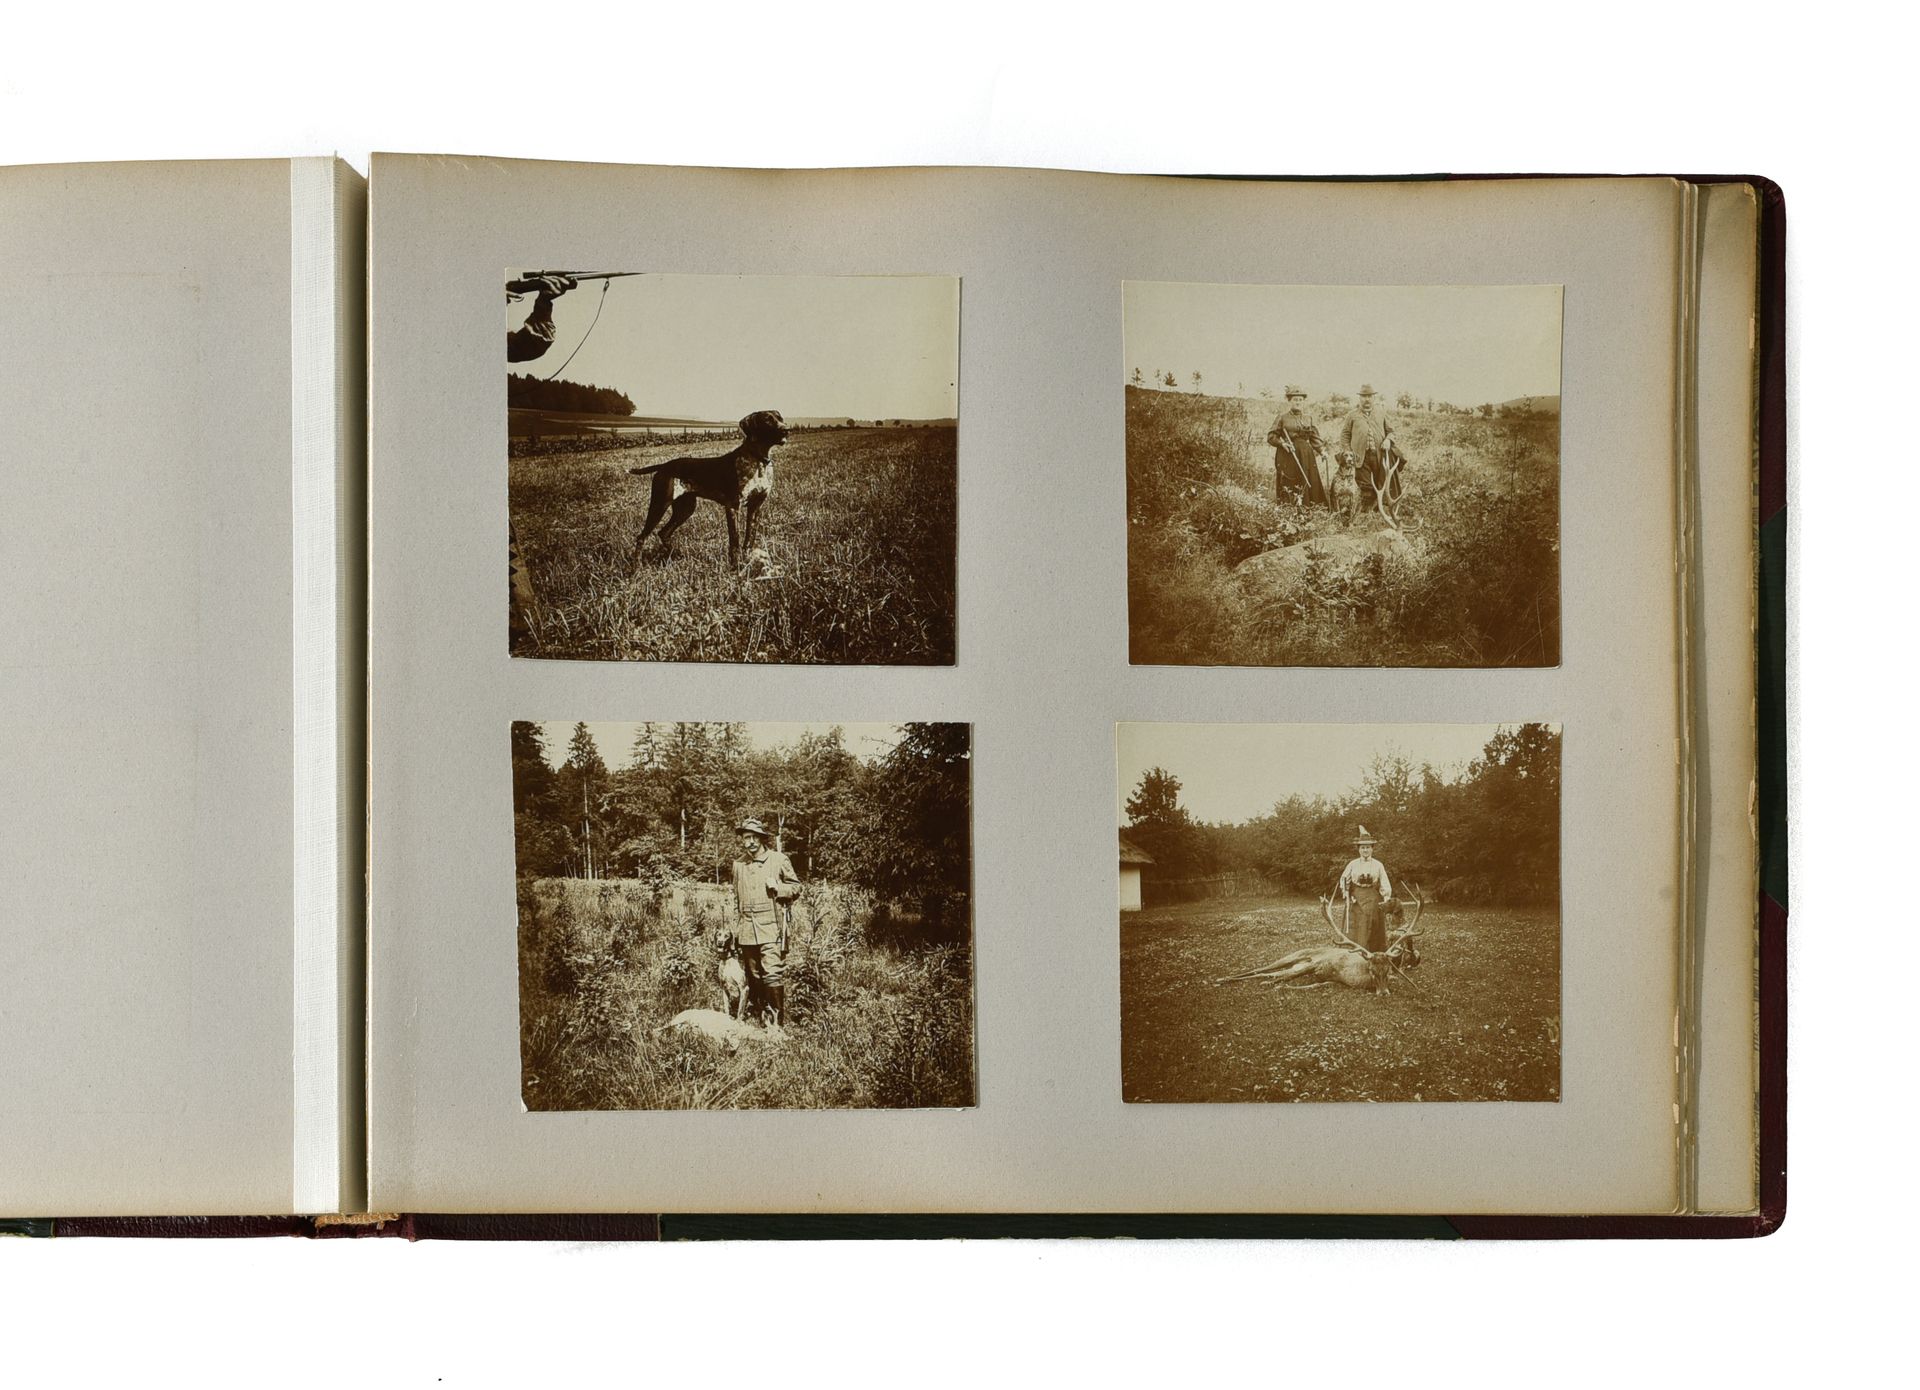 Album de photographies de chiens BELGIEN, UM 1900

Album mit Fotos von Hunden


&hellip;